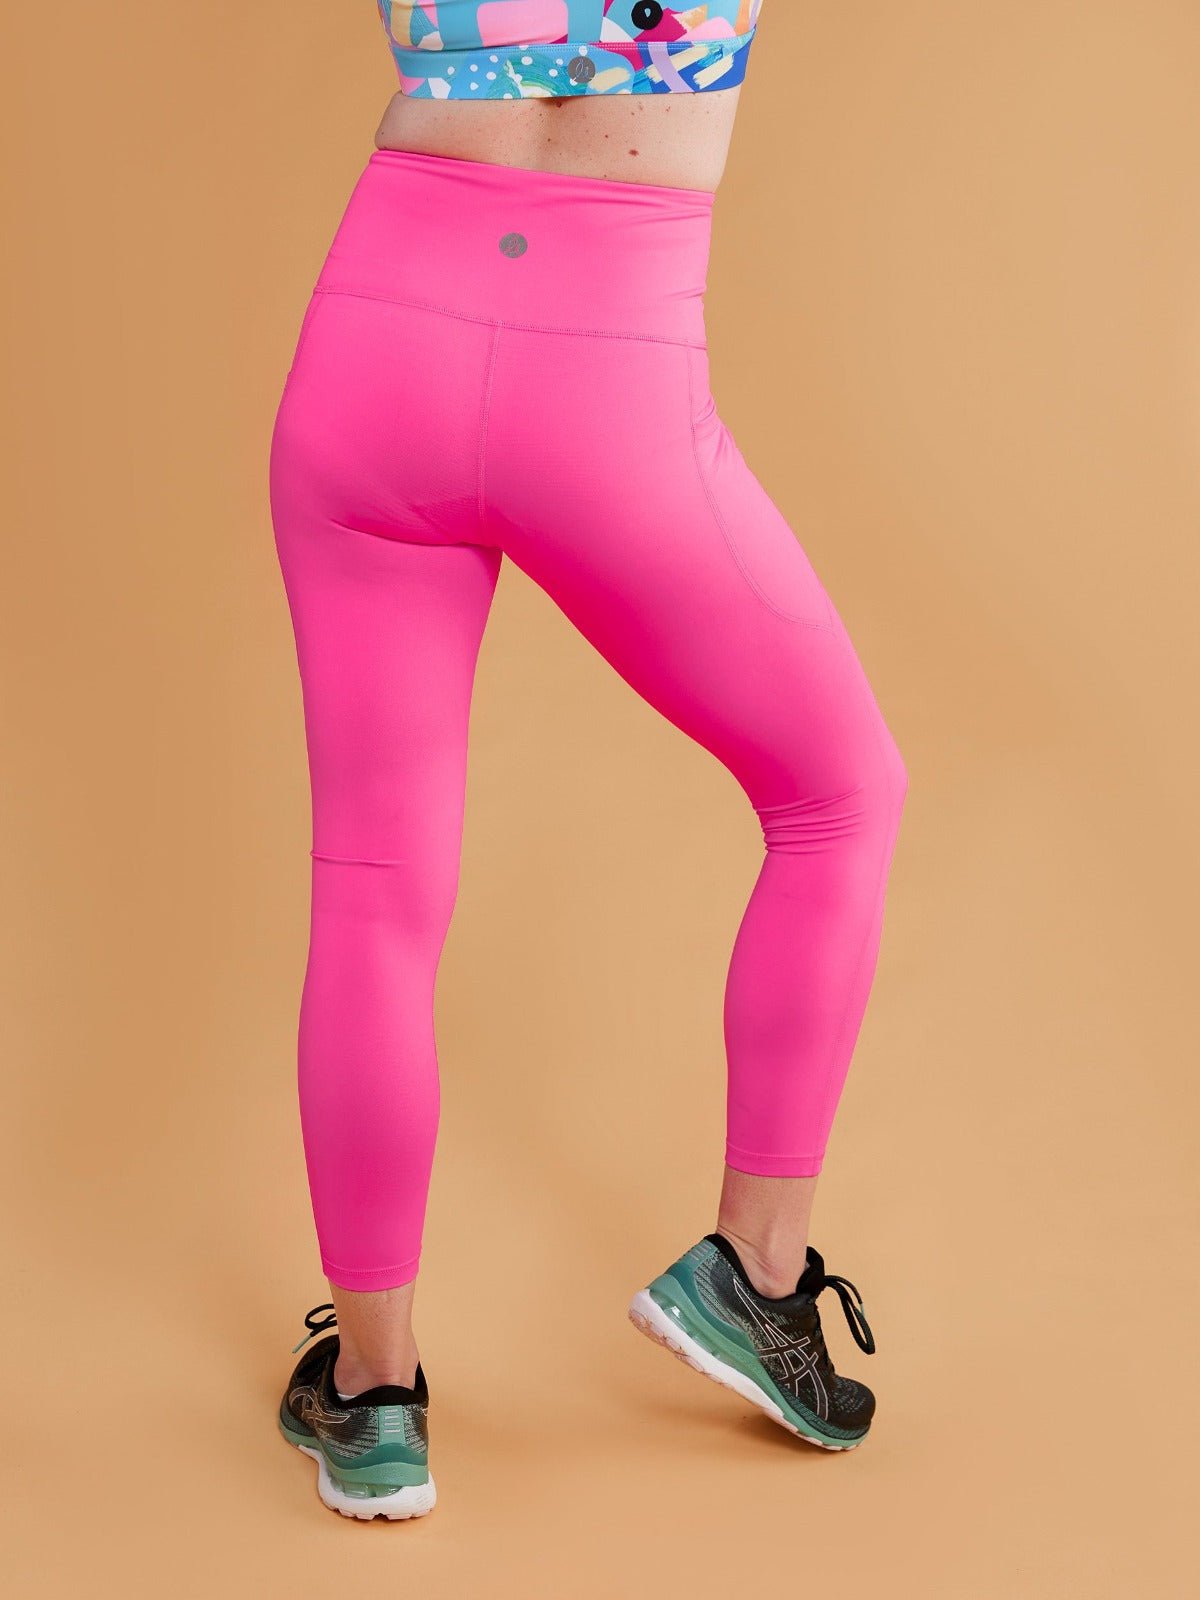 Neon Pink Everyday Legging - 7/8 length - neon pink squat proof leggings